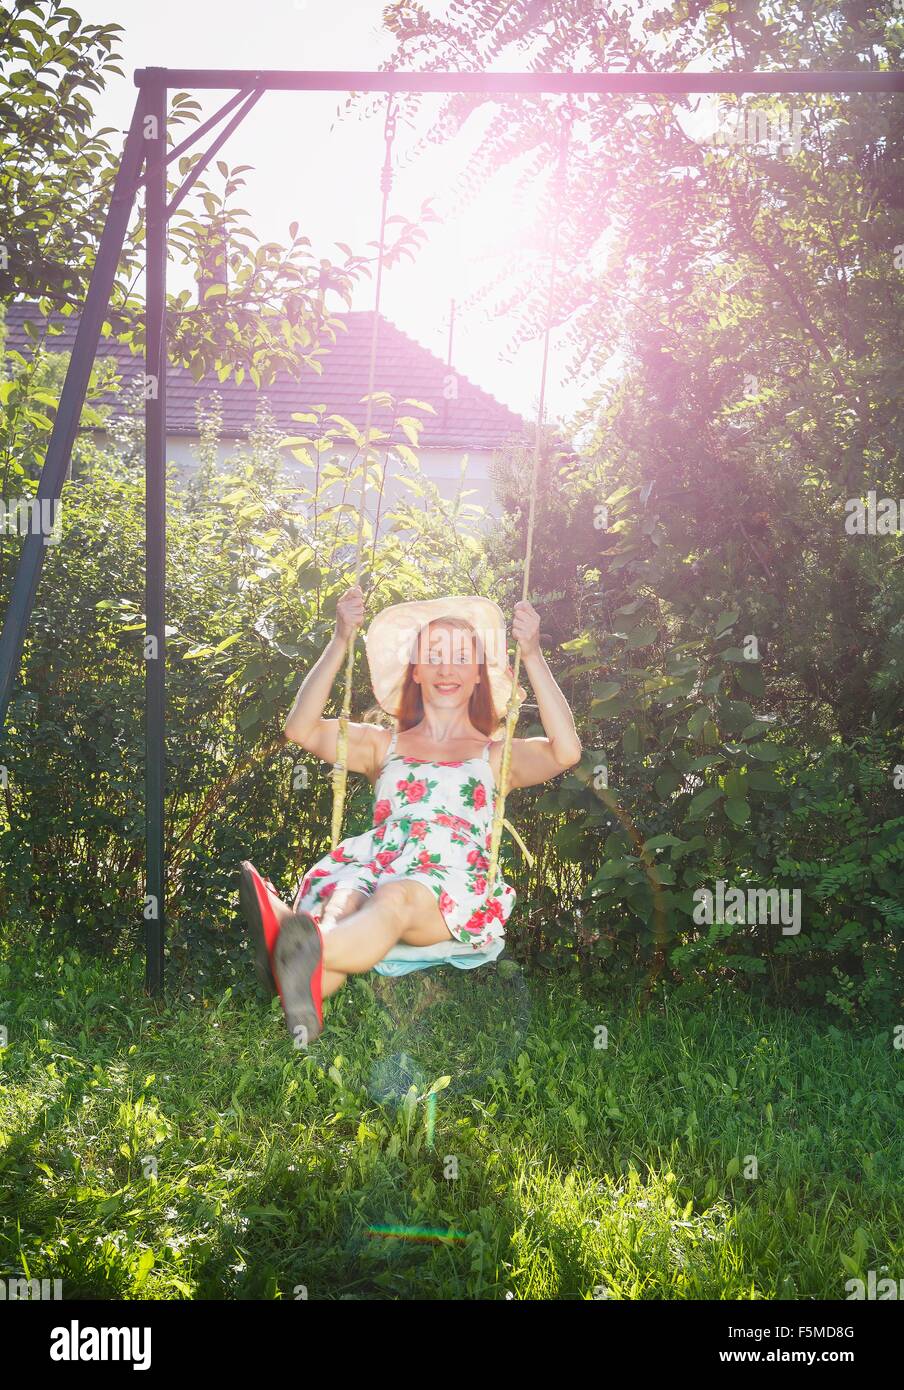 Mid adult woman swinging on garden swing Stock Photo